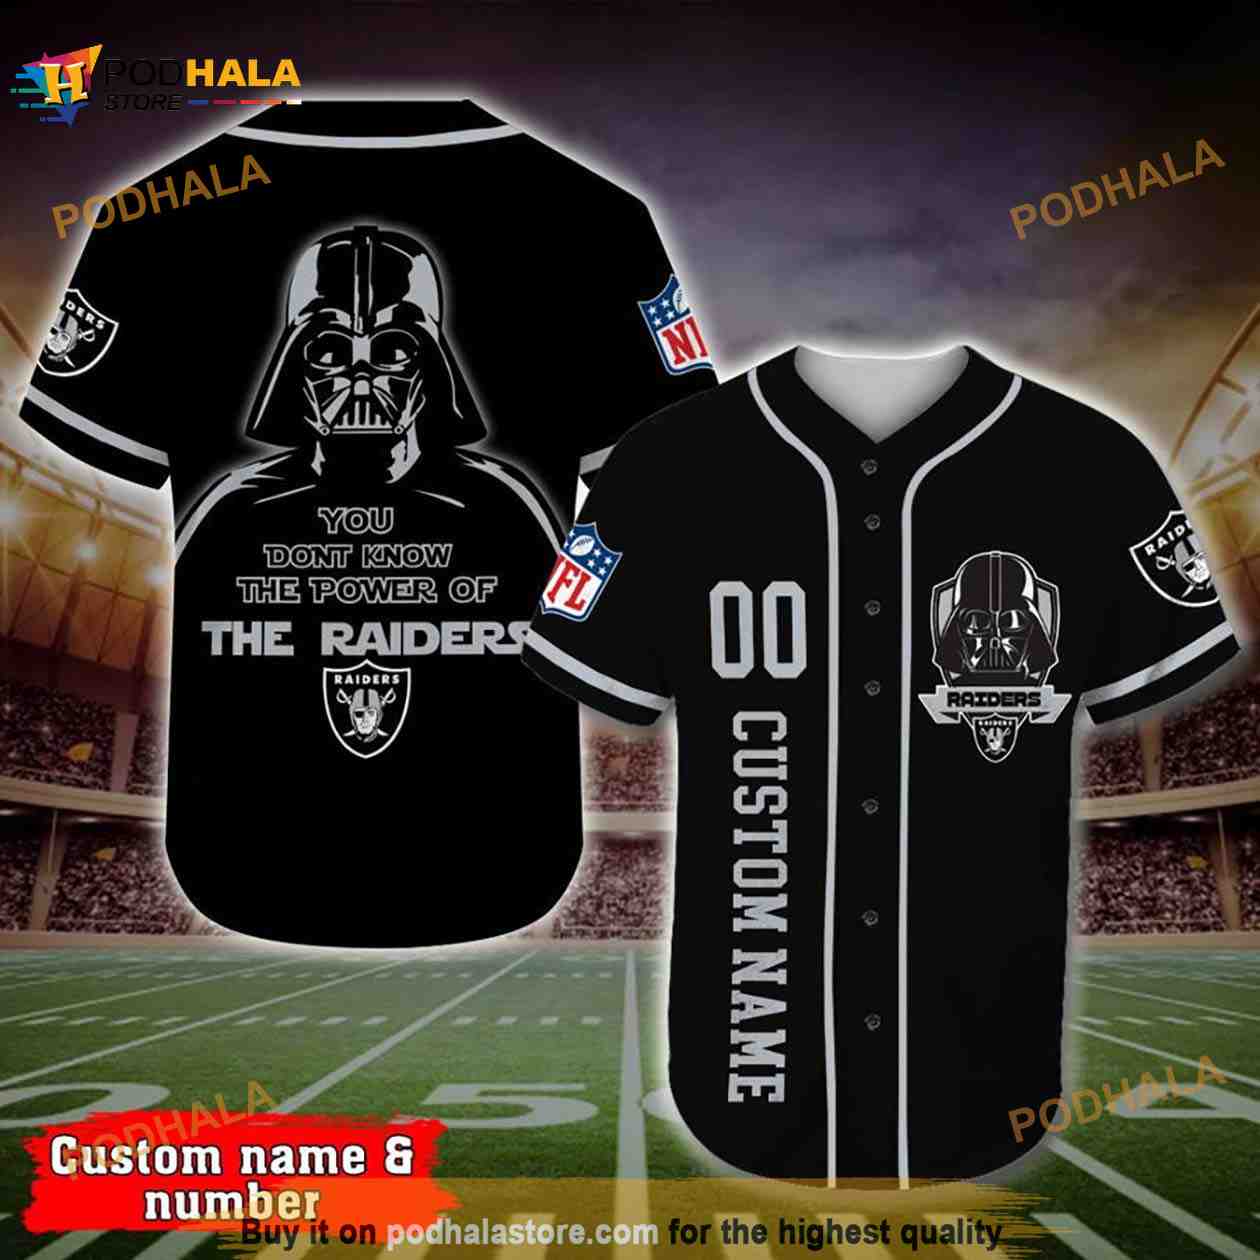 customized raider jerseys